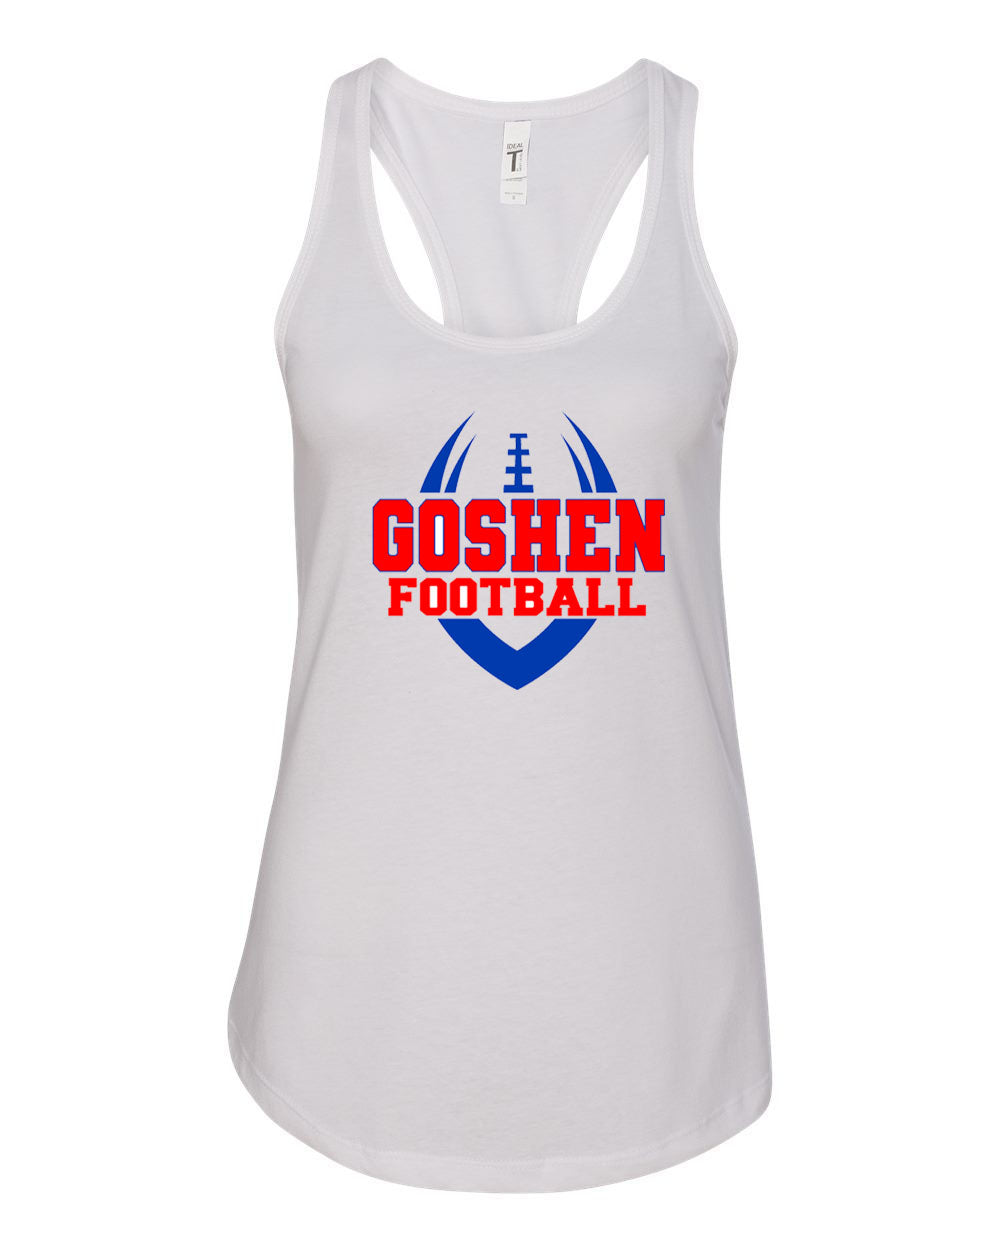 Goshen Football Design 1 Racerback Tank Top